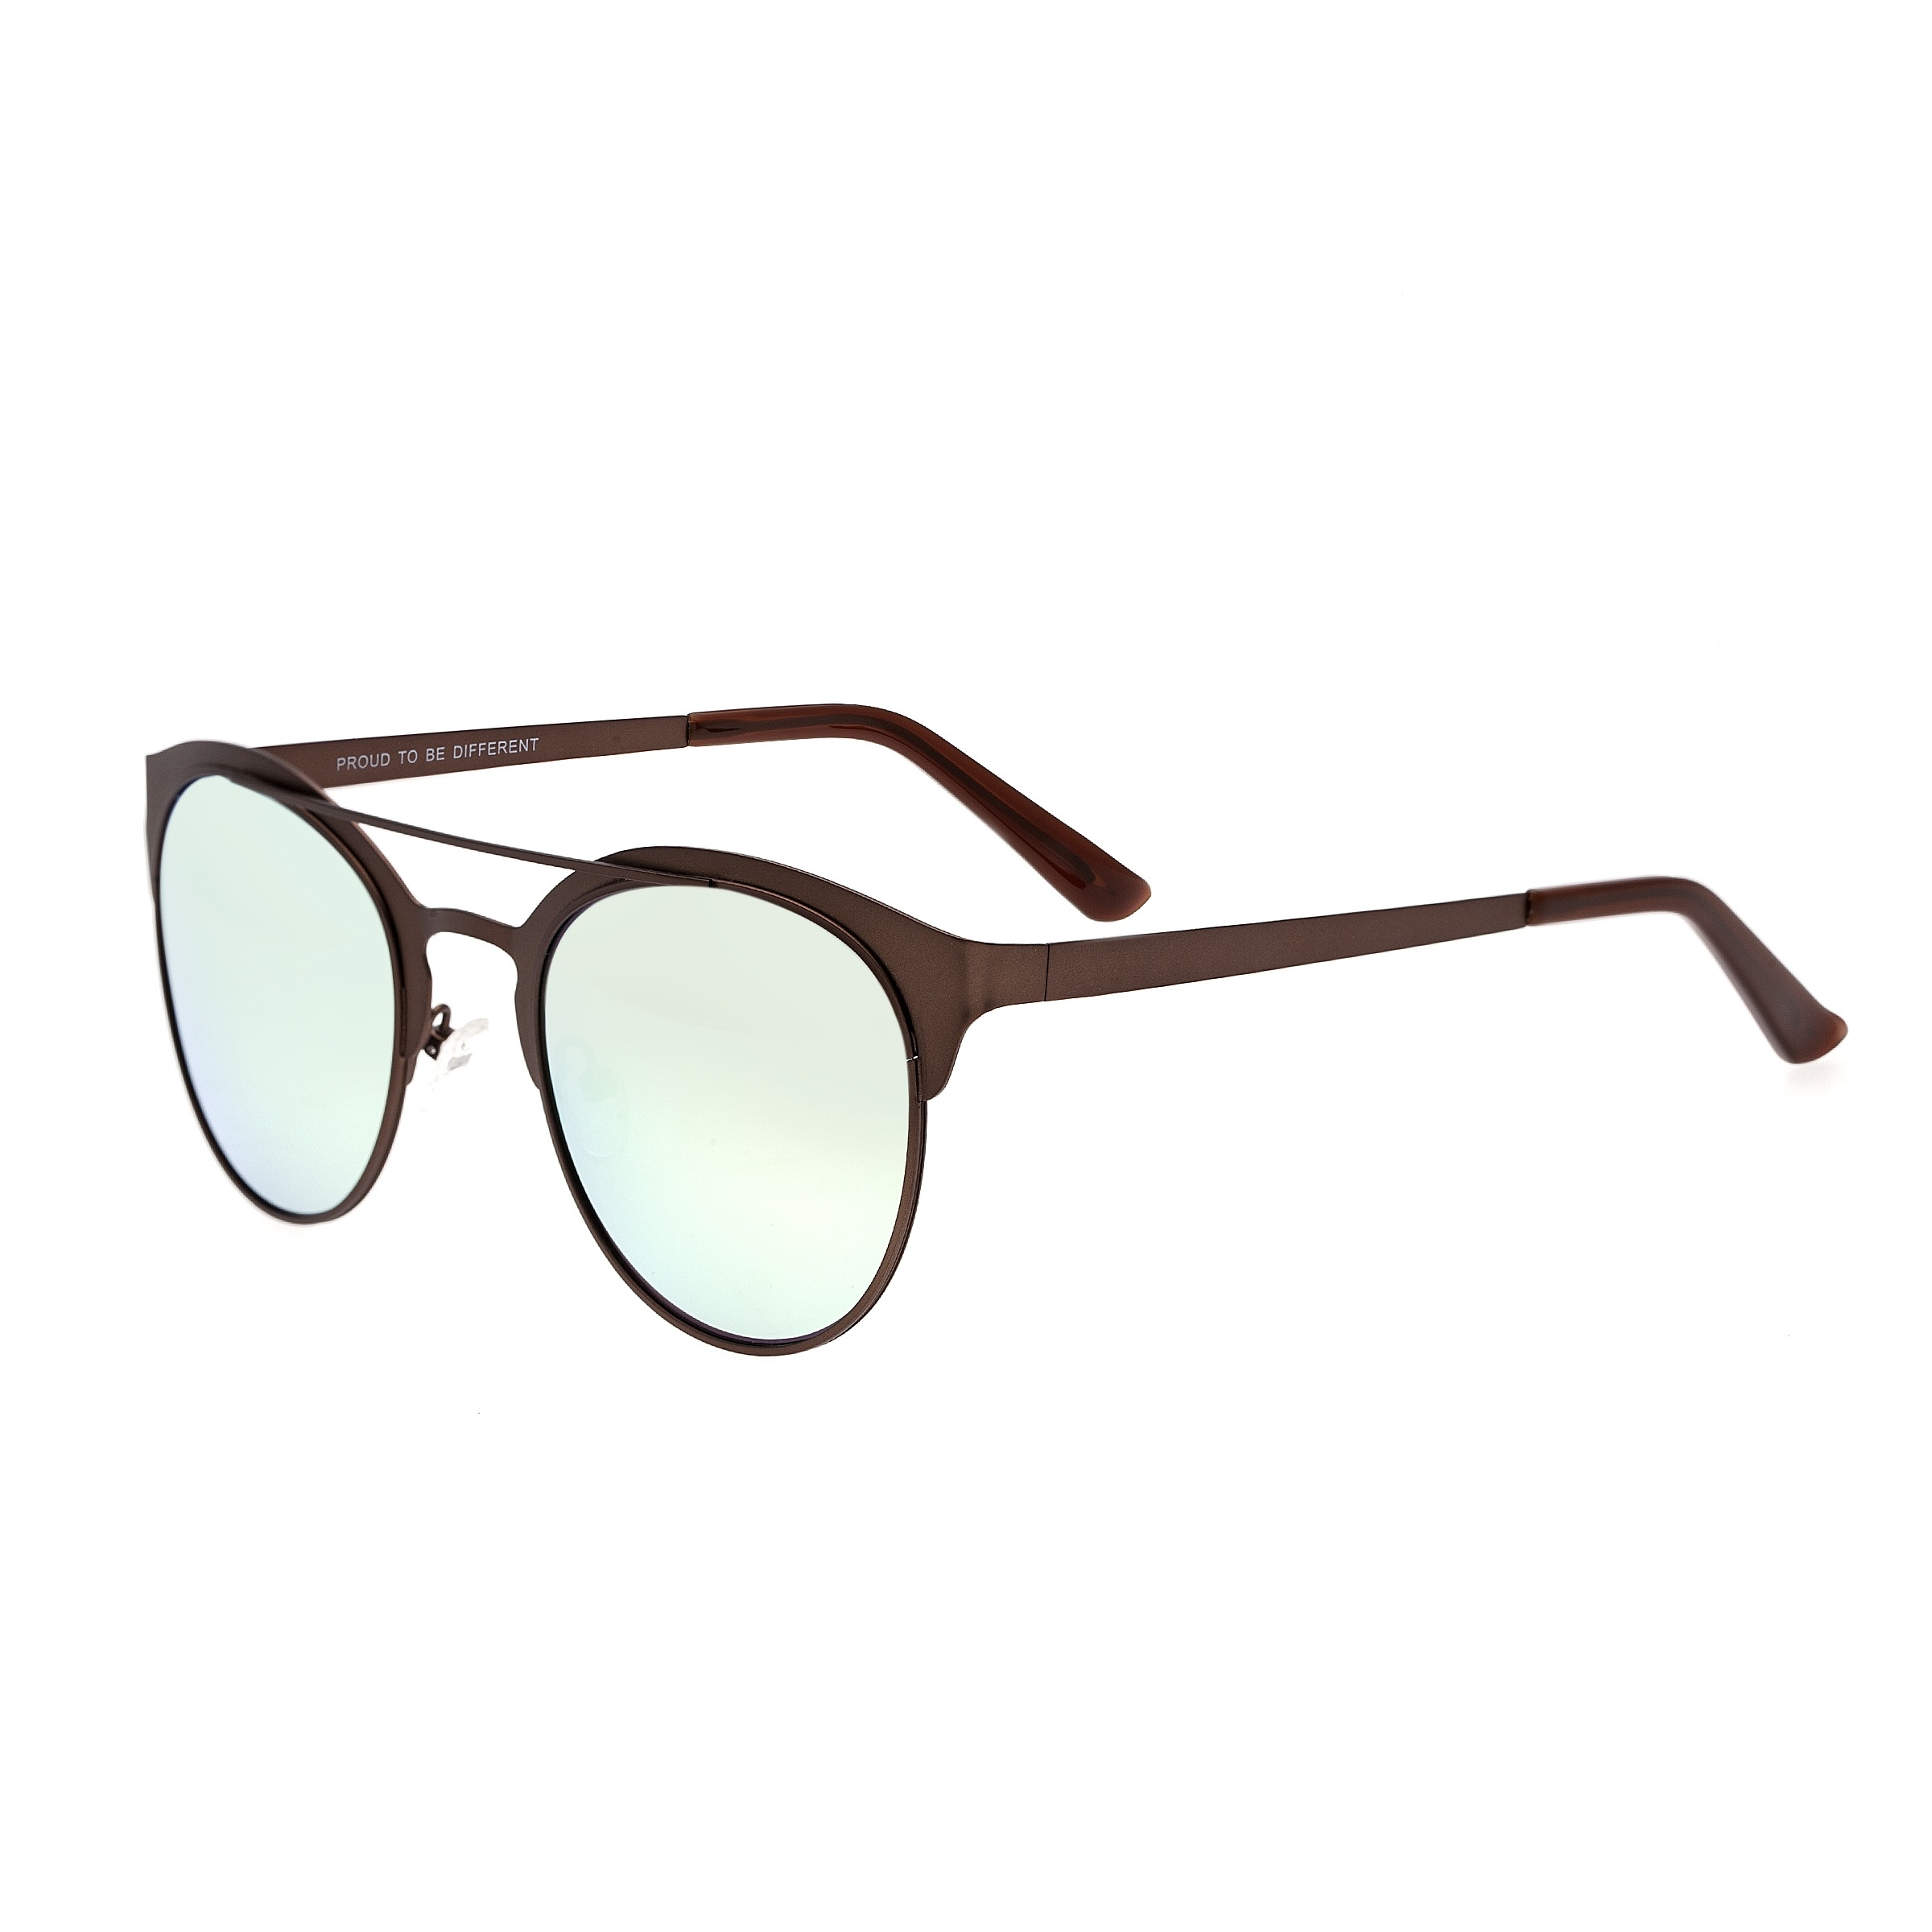 Breed Sunglasses BSG036BN Phoenix Sunglasses - Polarized Carbon Titanium Frame - image 3 of 6